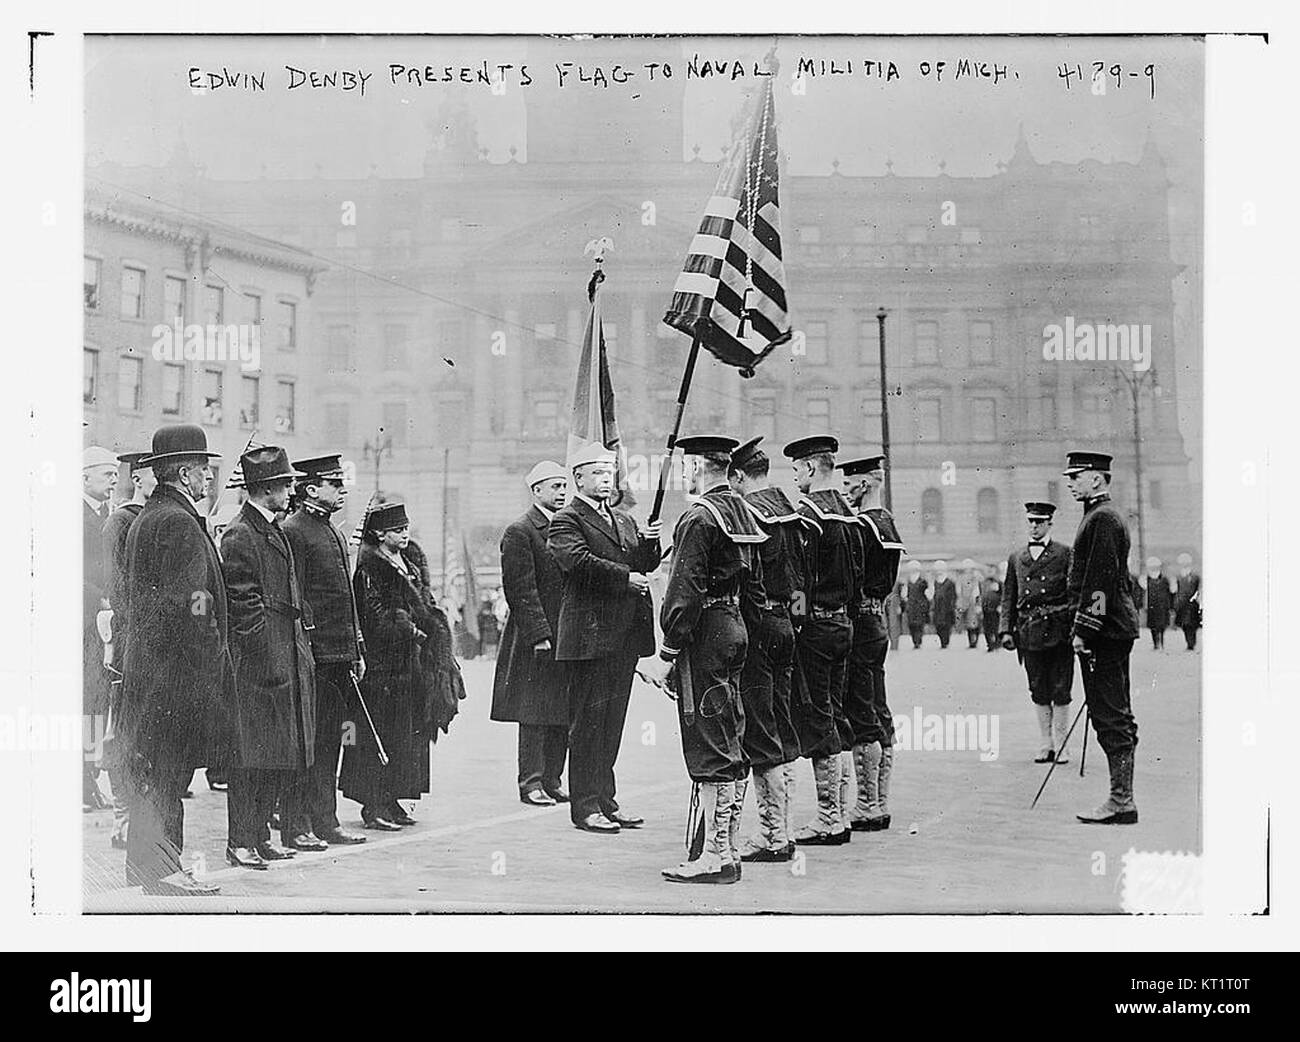 Edwin Denby presents flag to naval militia of Michigan Stock Photo - Alamy